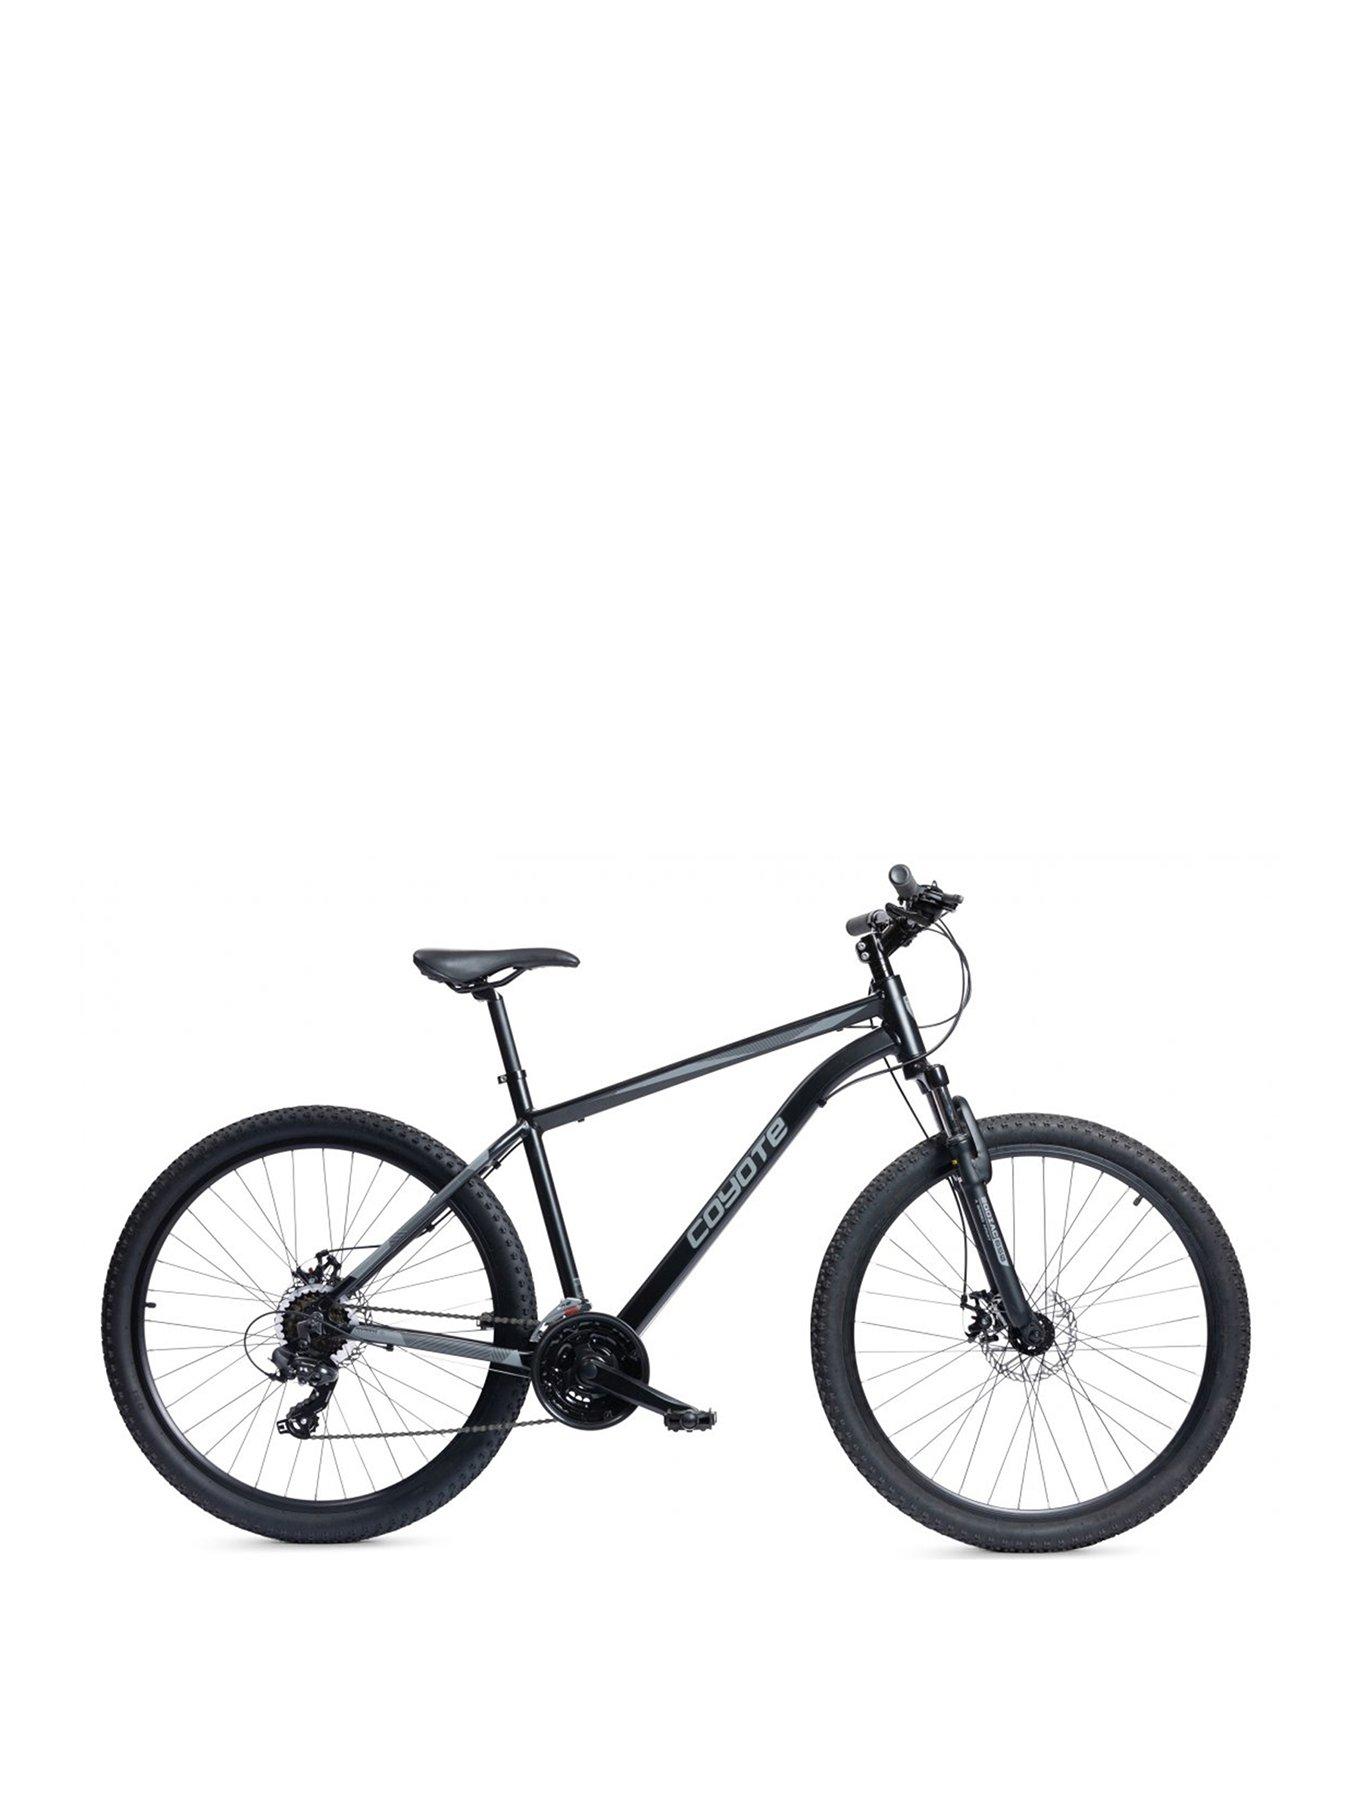 16 inch frame mountain bike for sale